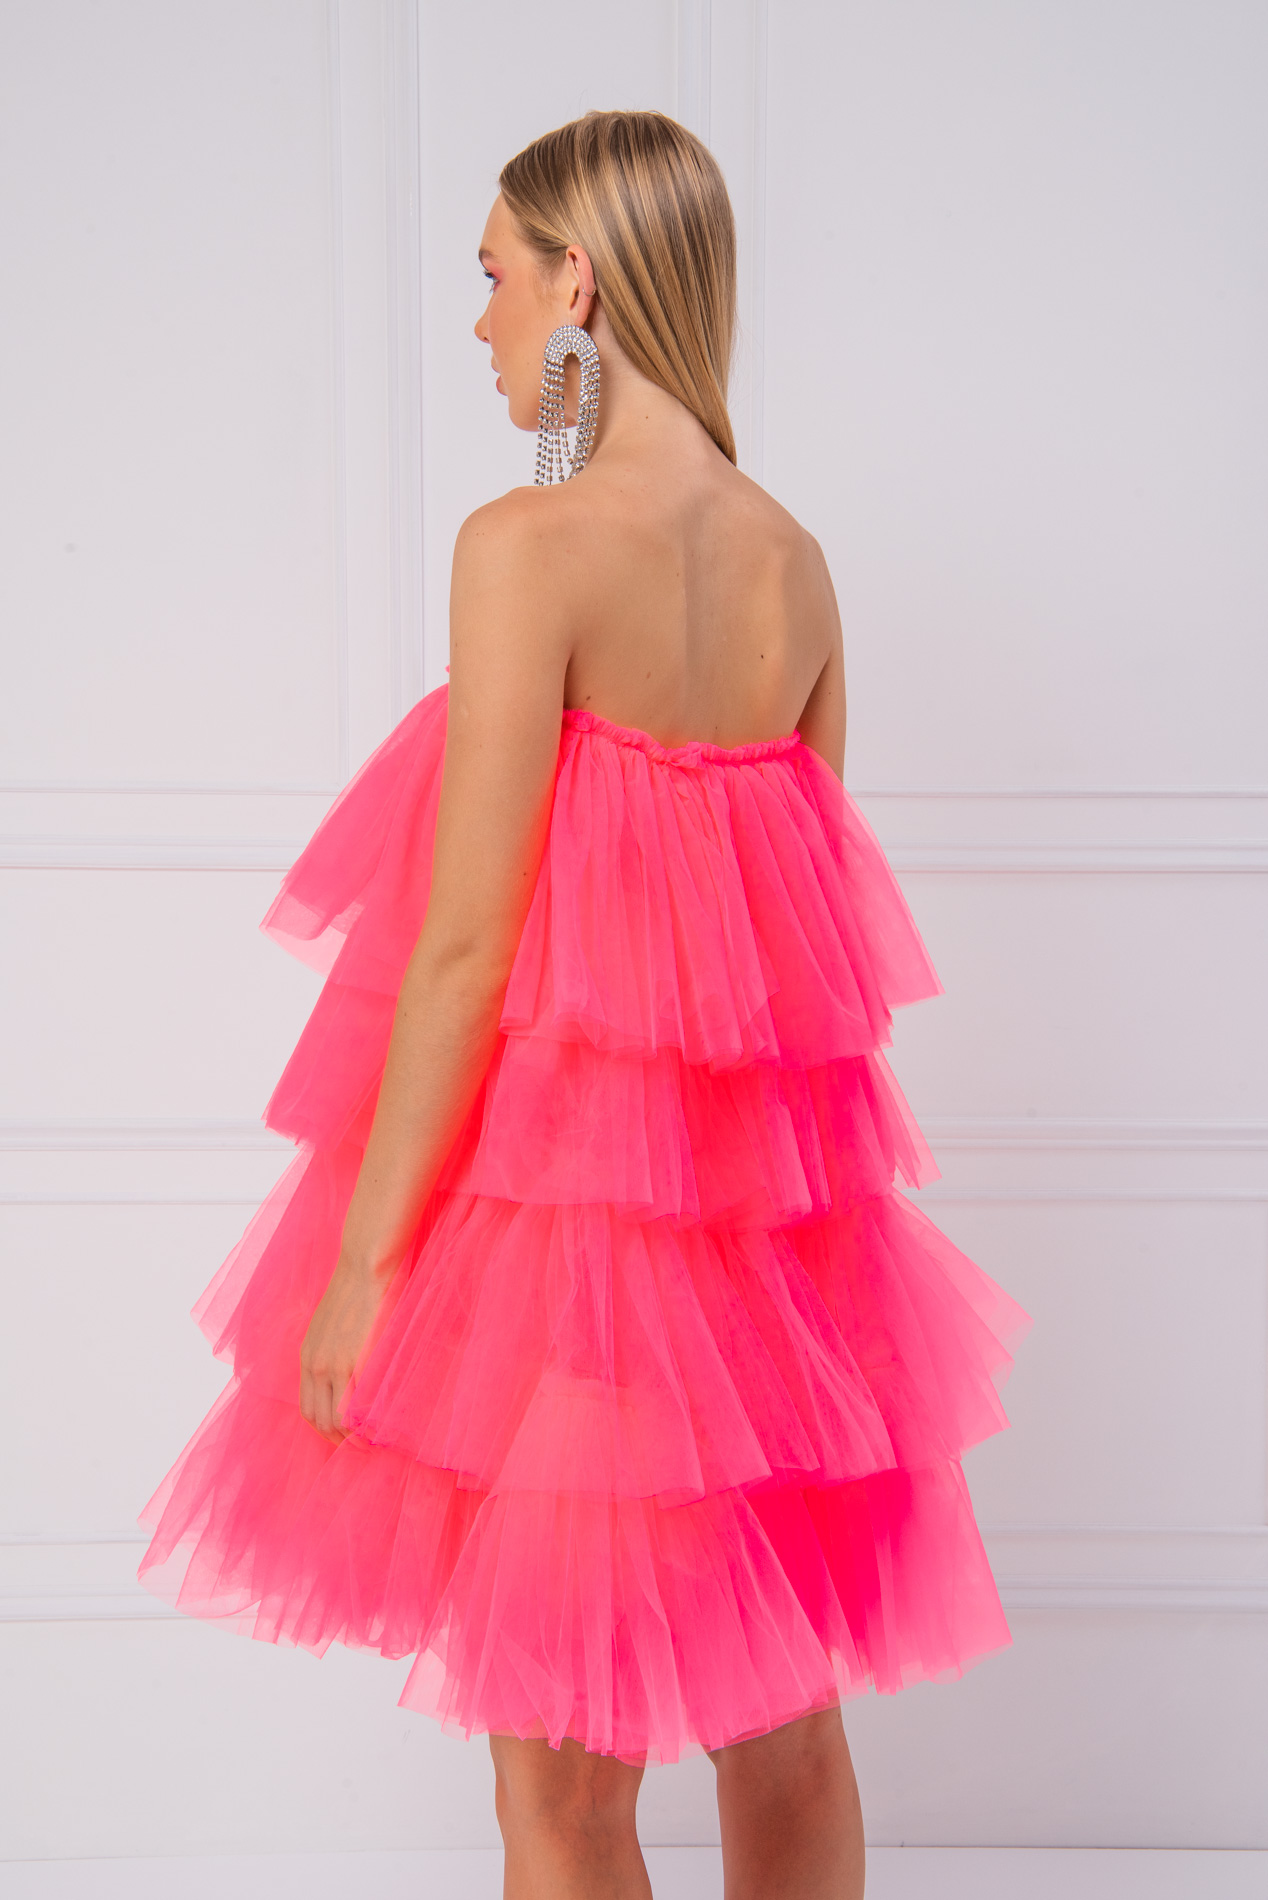 Off The Shoulder Neon Pink Tulle Dress